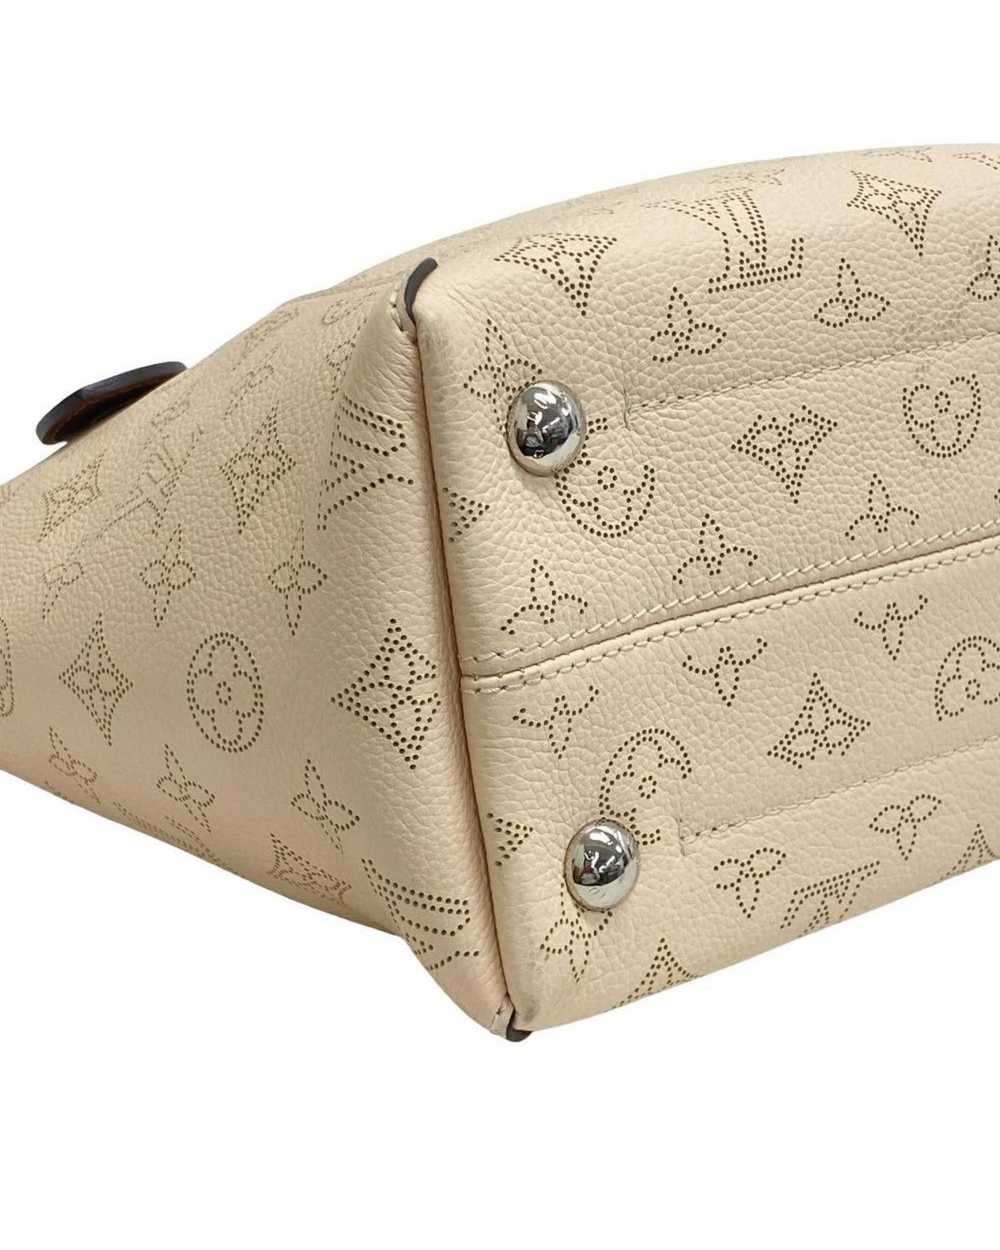 Louis Vuitton Elegant Beige Leather 2-Way Bag wit… - image 5